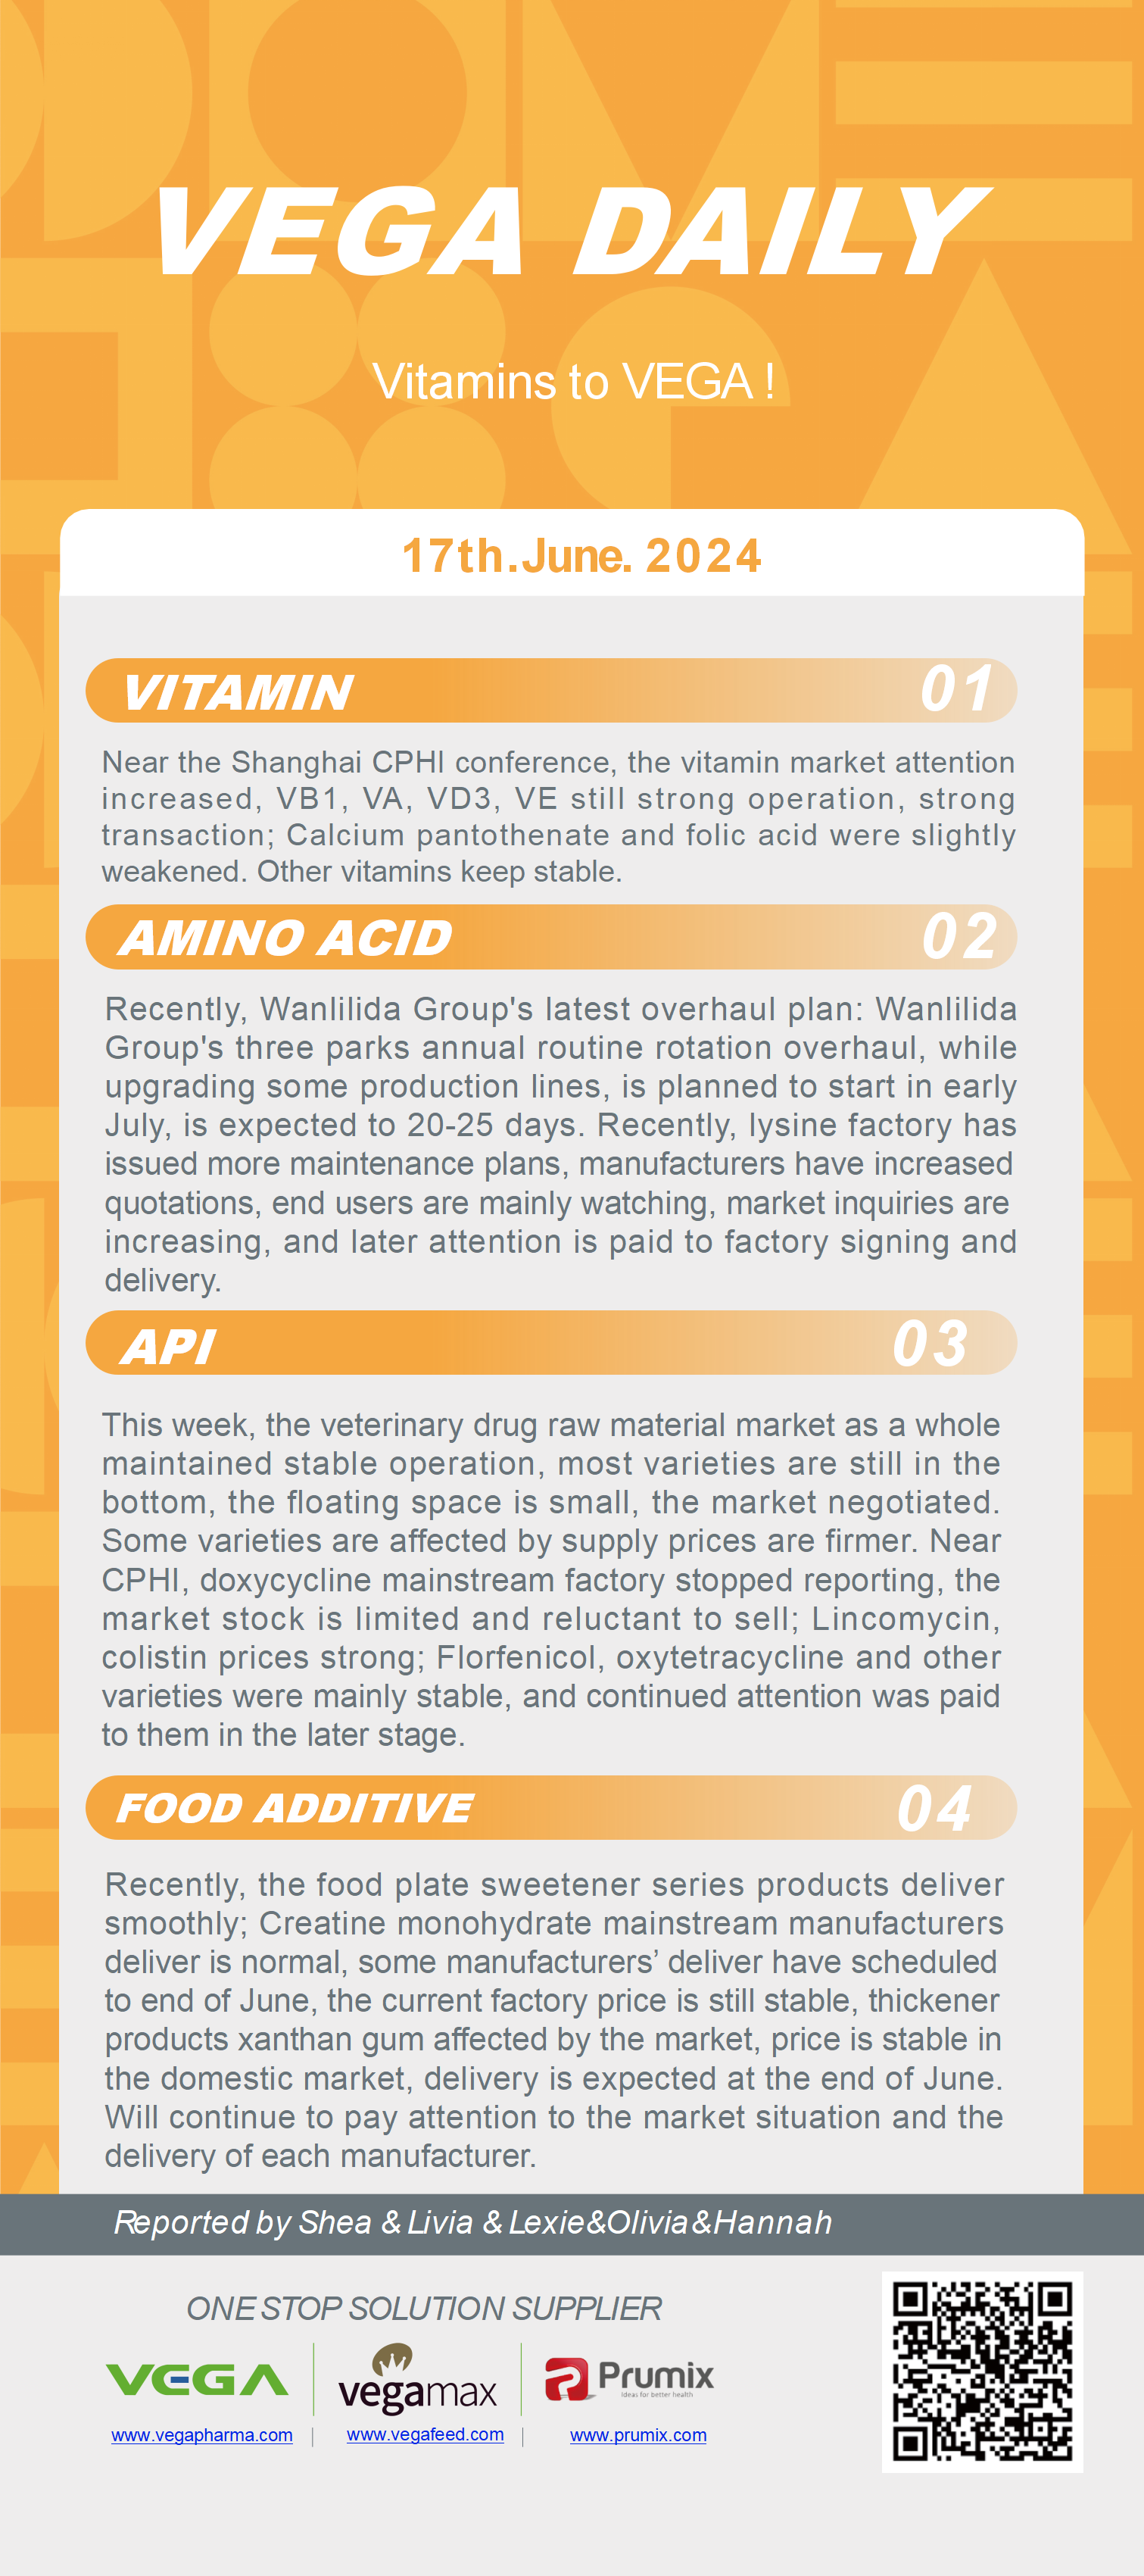 Vega Daily Dated on Jun 17th 2024 Vitamin Amino Acid APl Food Additives.png